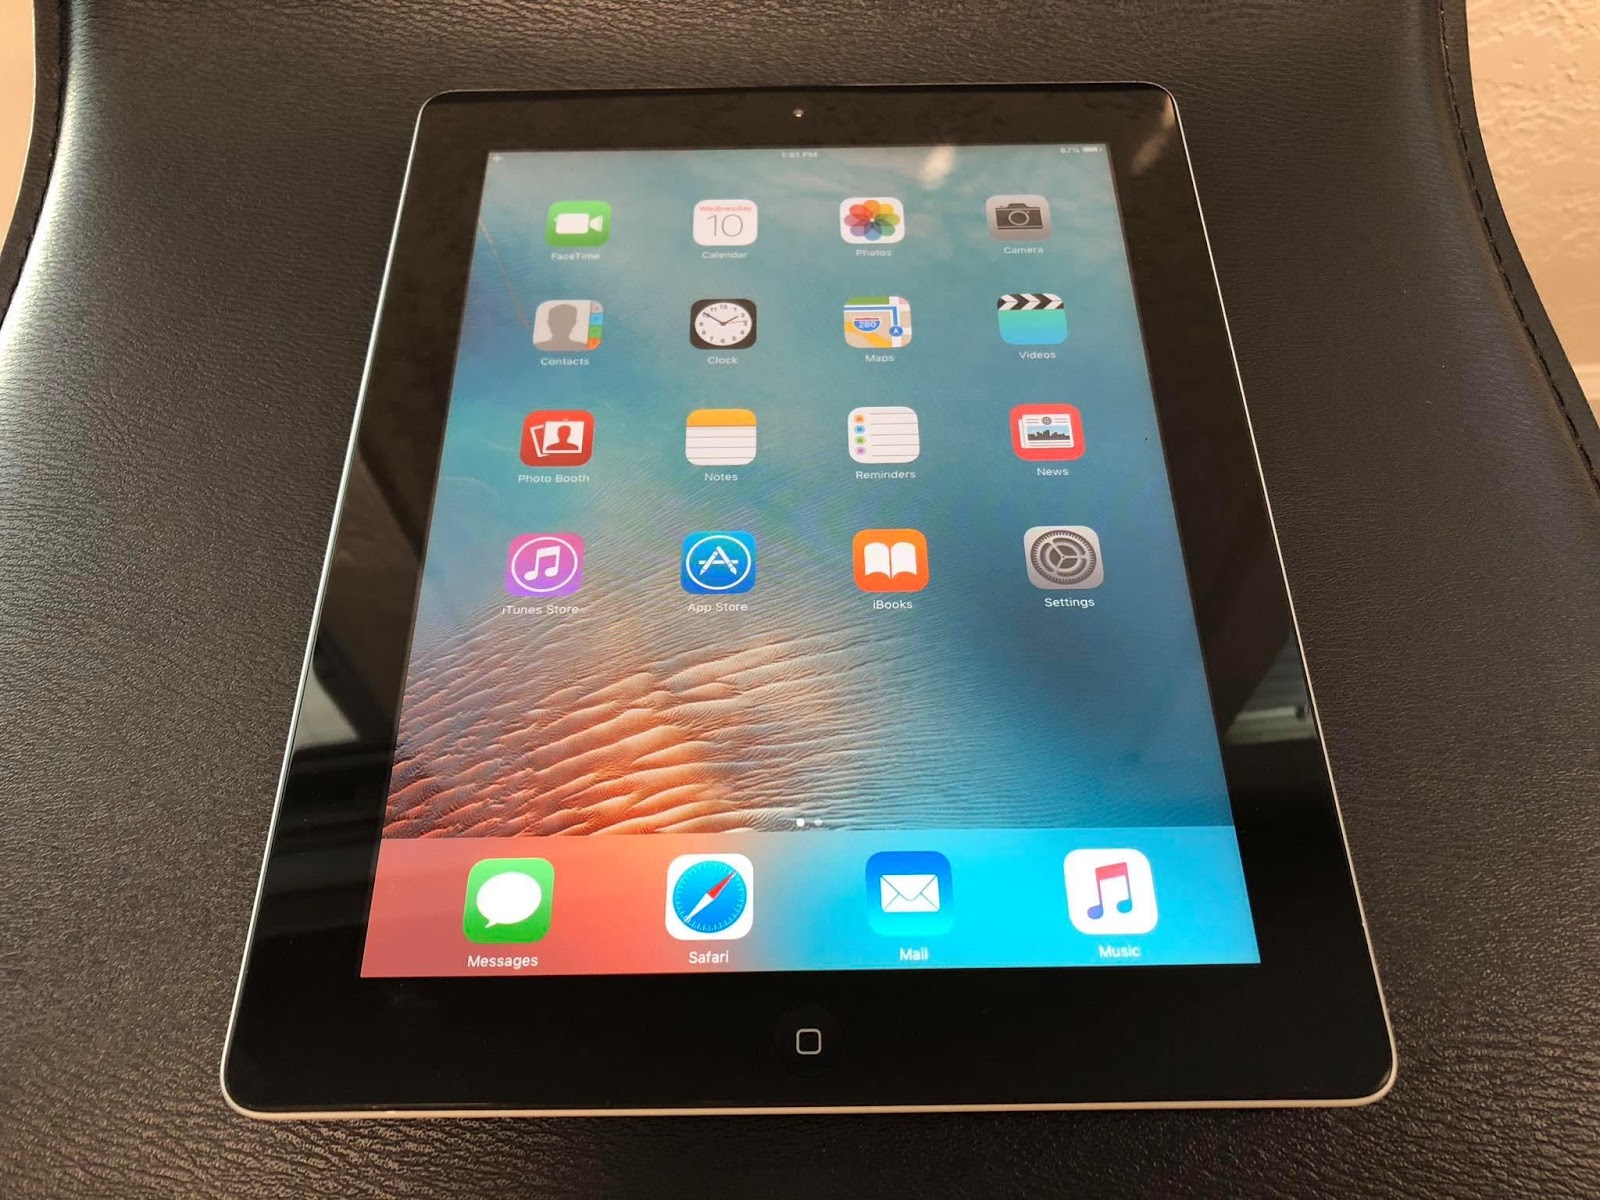 Apple iPad Mini 32GB Apple ipad mini: setting up - Singkatnya Blog's